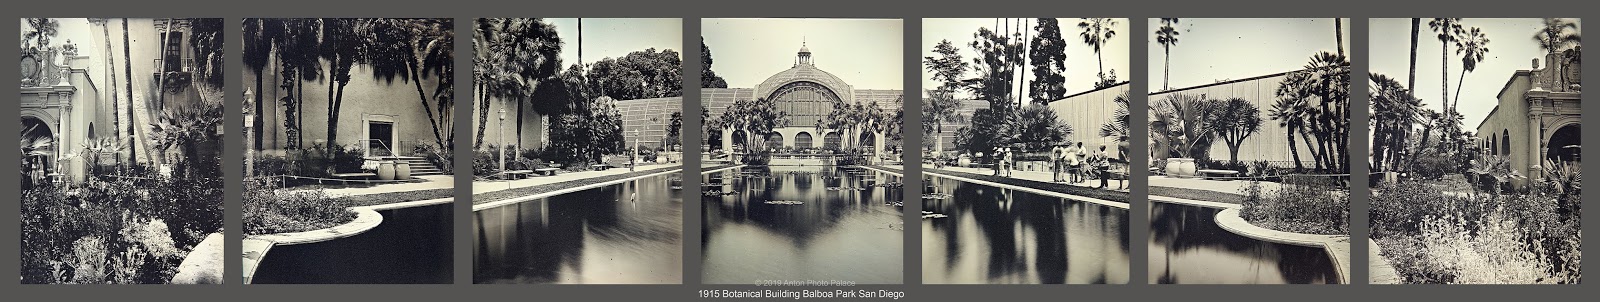 San_Diego_Balboa_Park_Botanical_Building_7plate_4x5_Daguerreotype_Antorama_Anton_Photo_Palace_Web